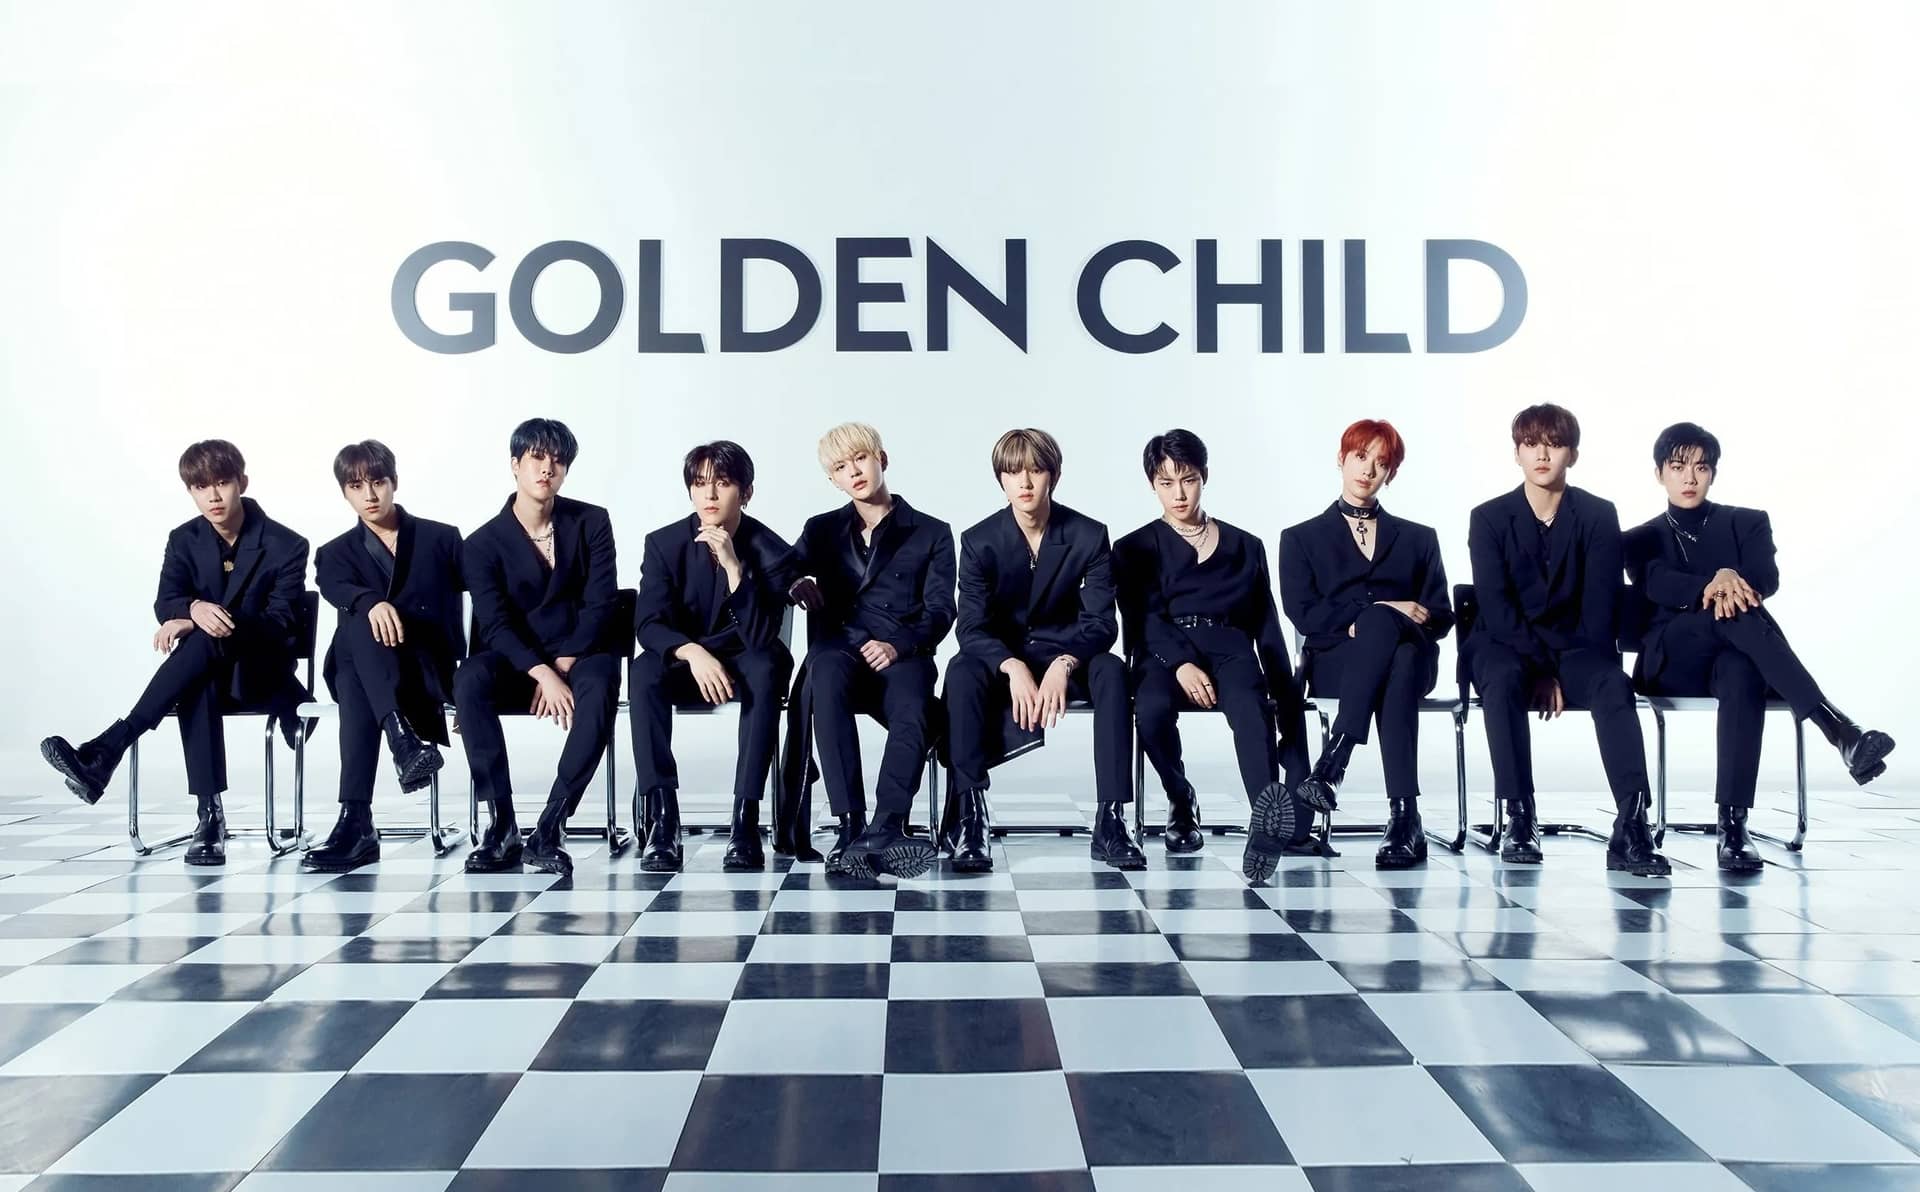 Golden Child - Kpop grupo perfil, integrantes, idades, alturas, fatos